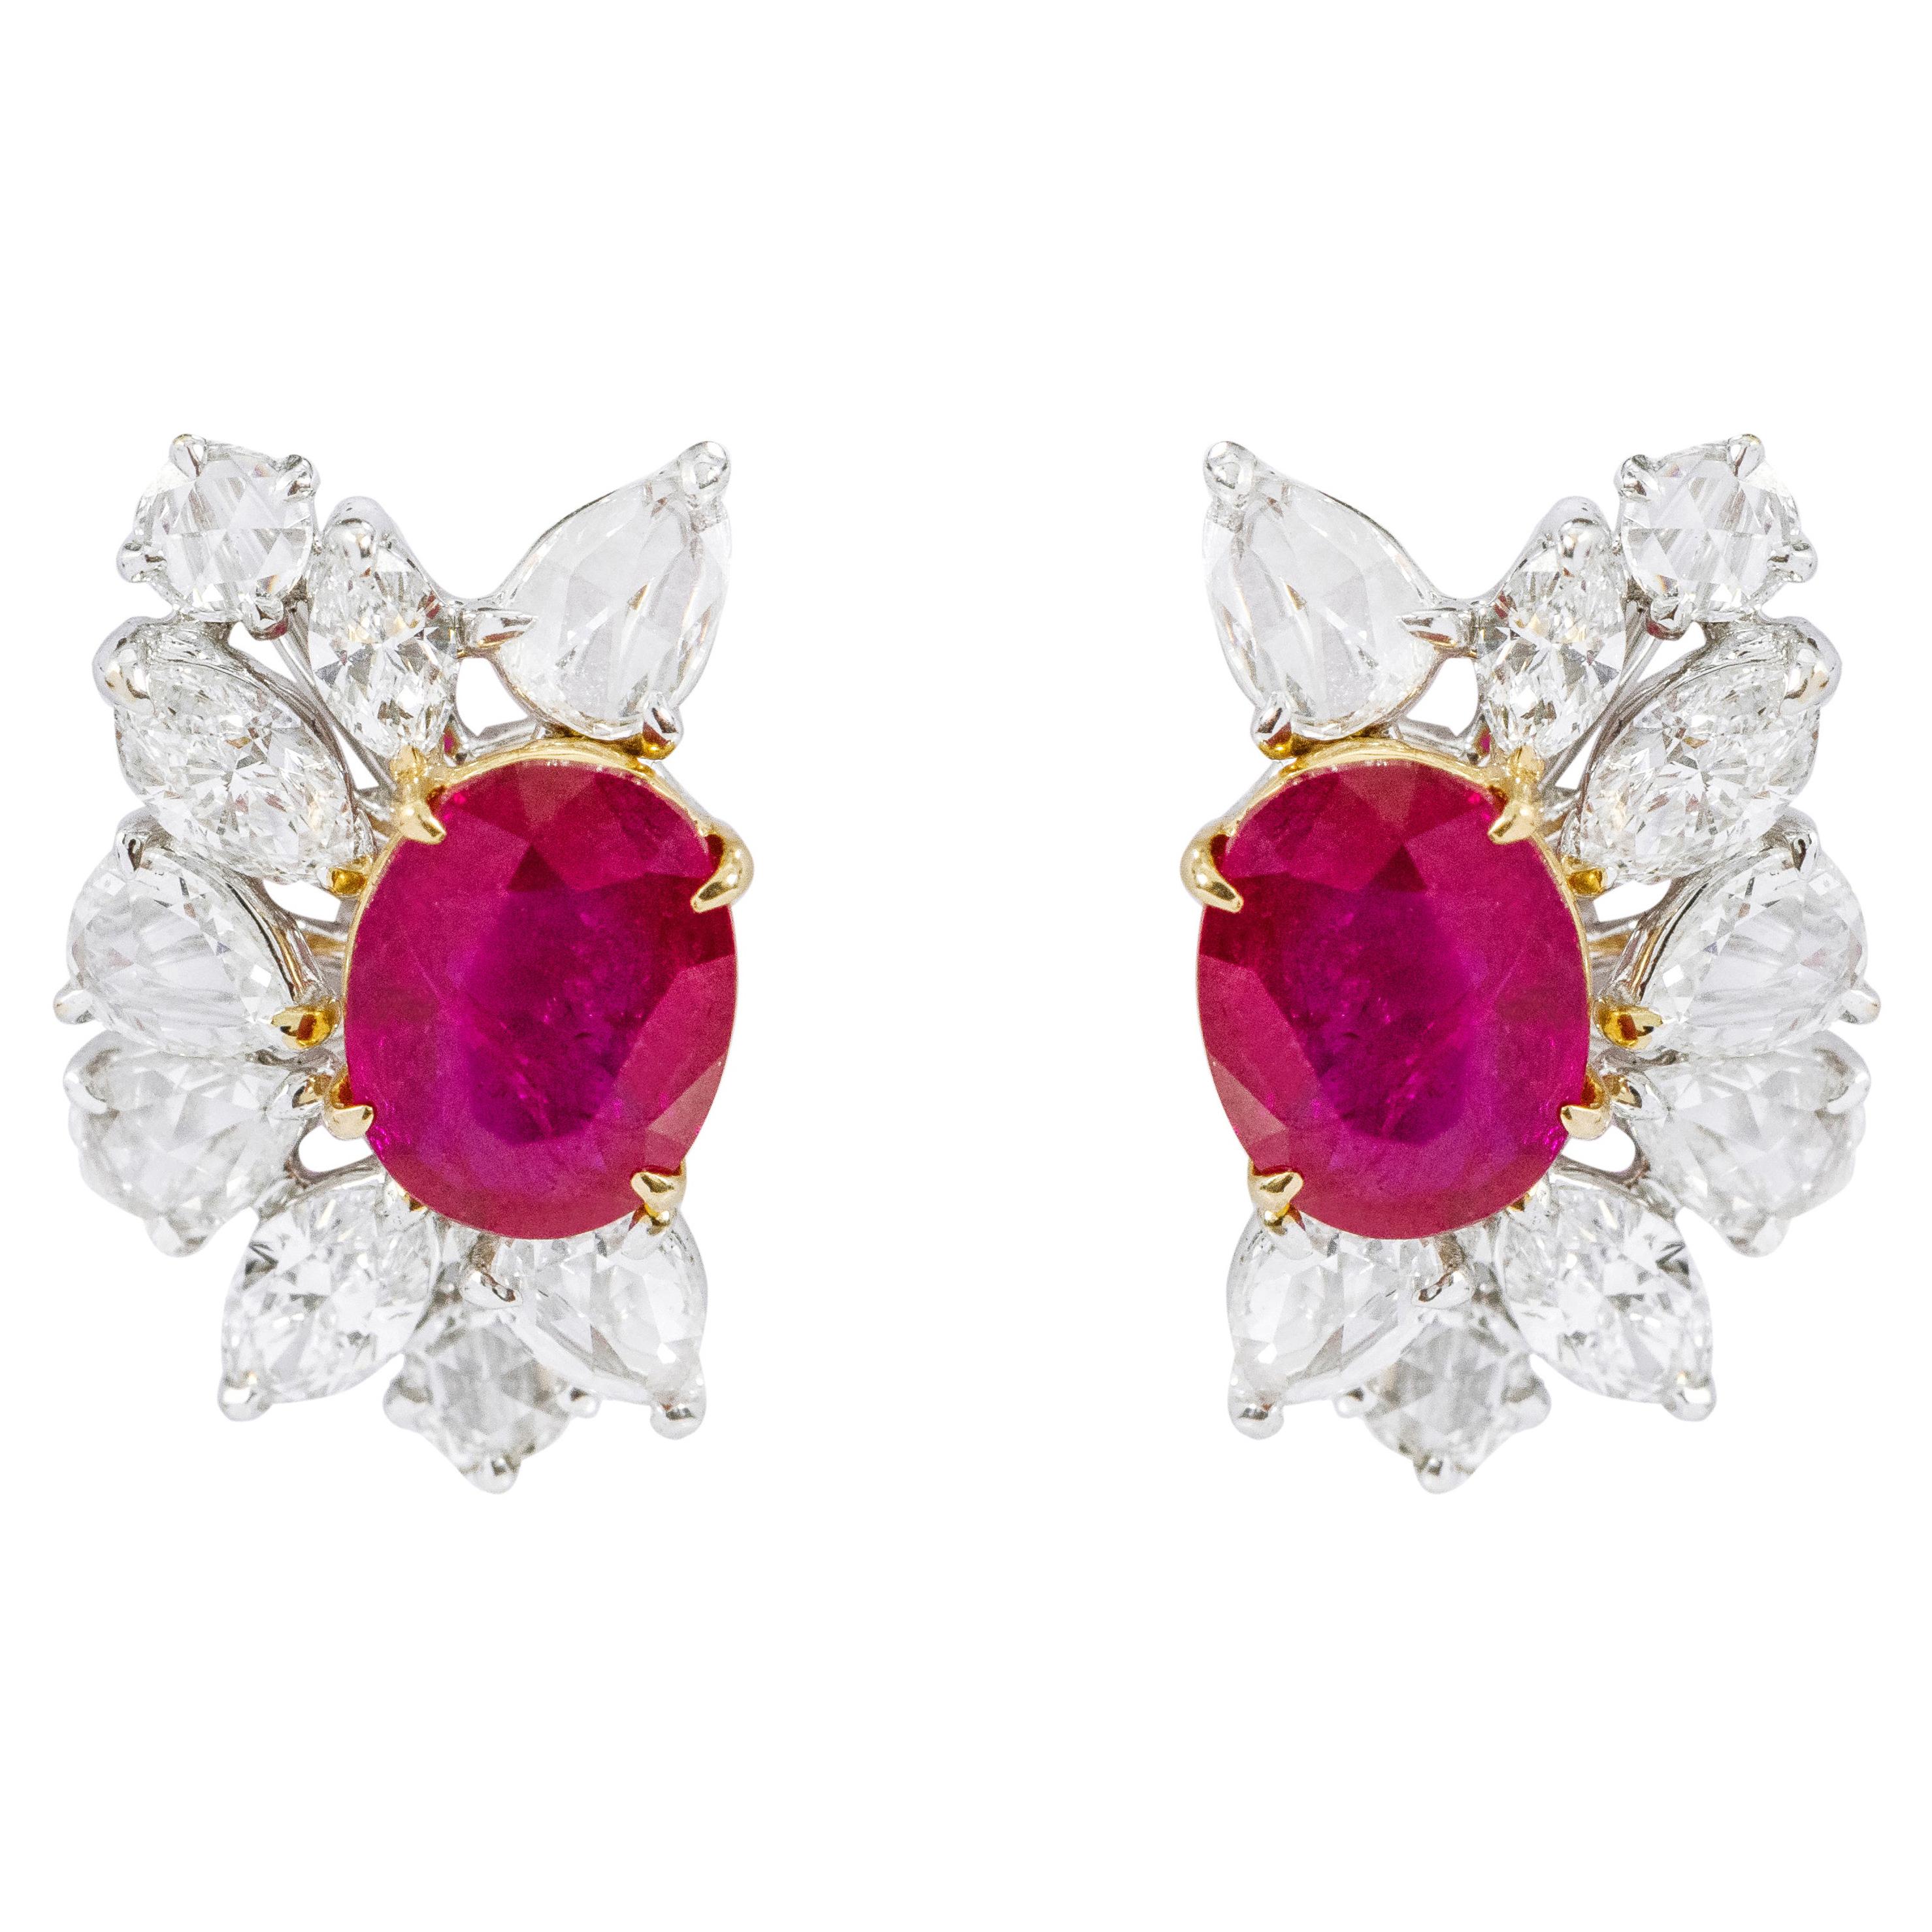 18 Karat White Gold 4.96 Carats Ruby and Diamond Statement Stud Earrings